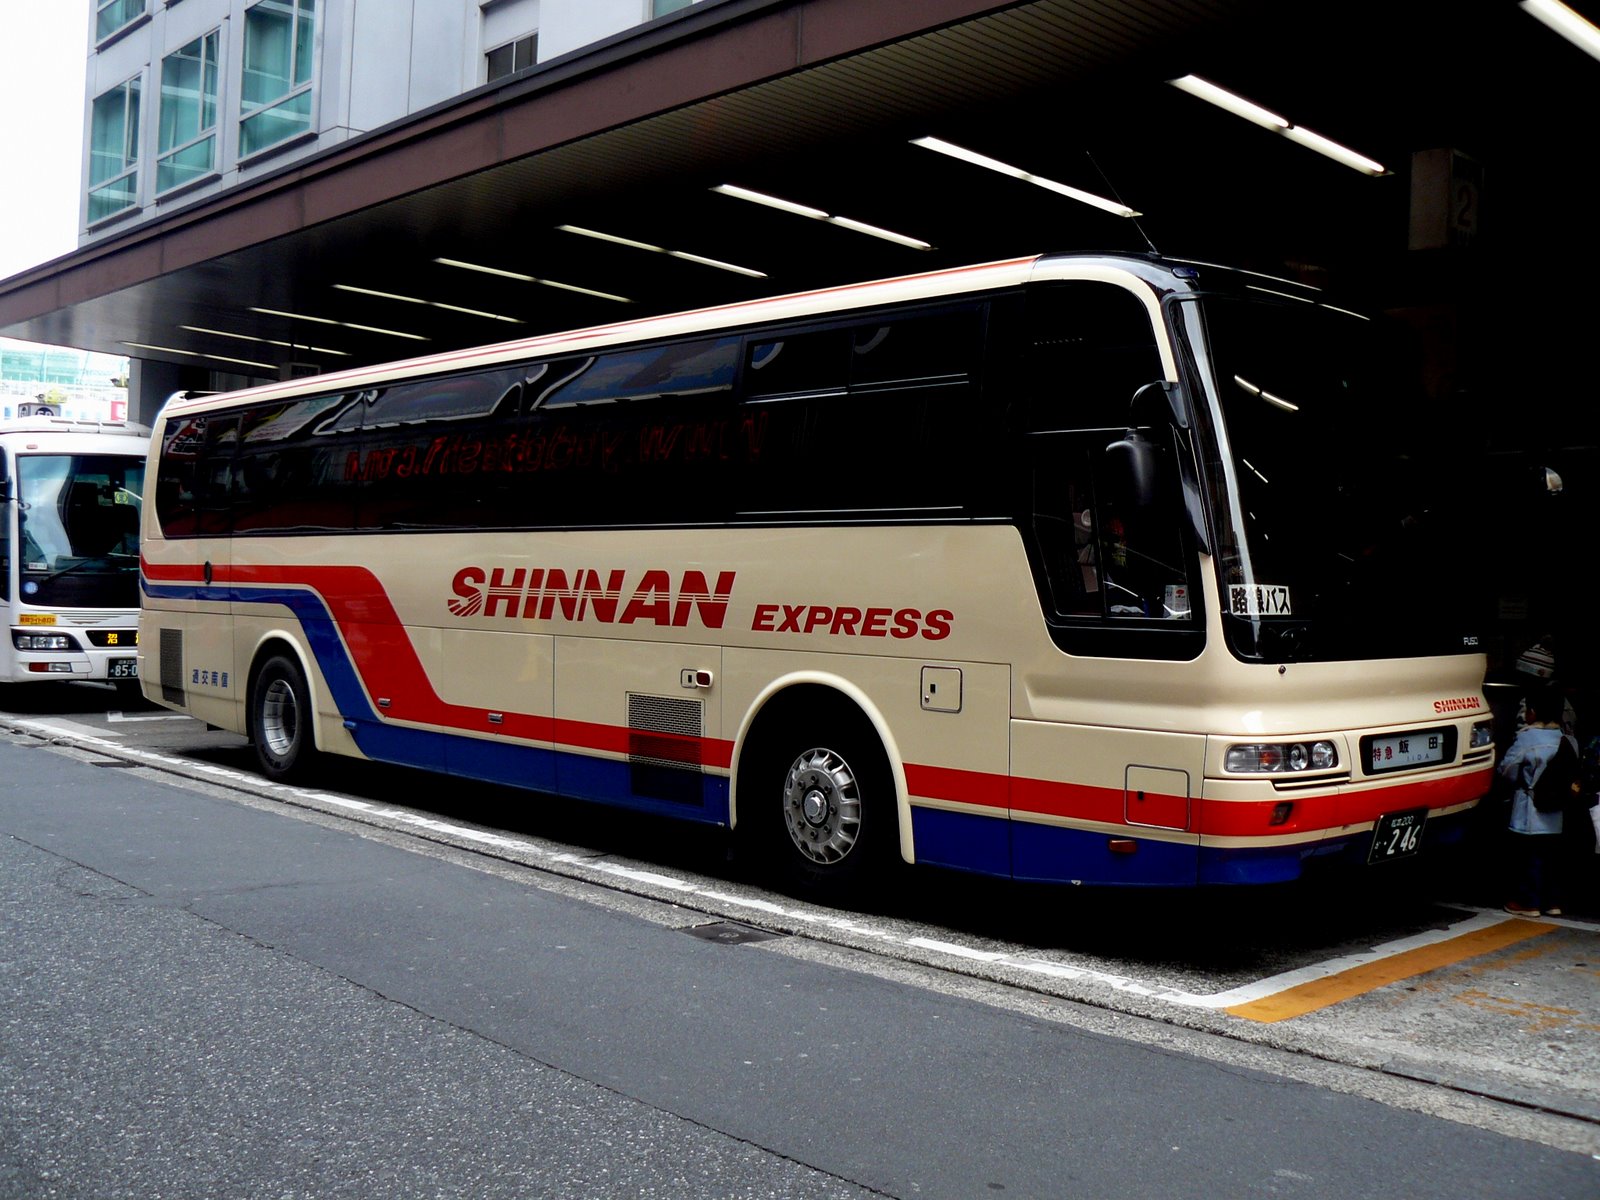 Shinnan Express